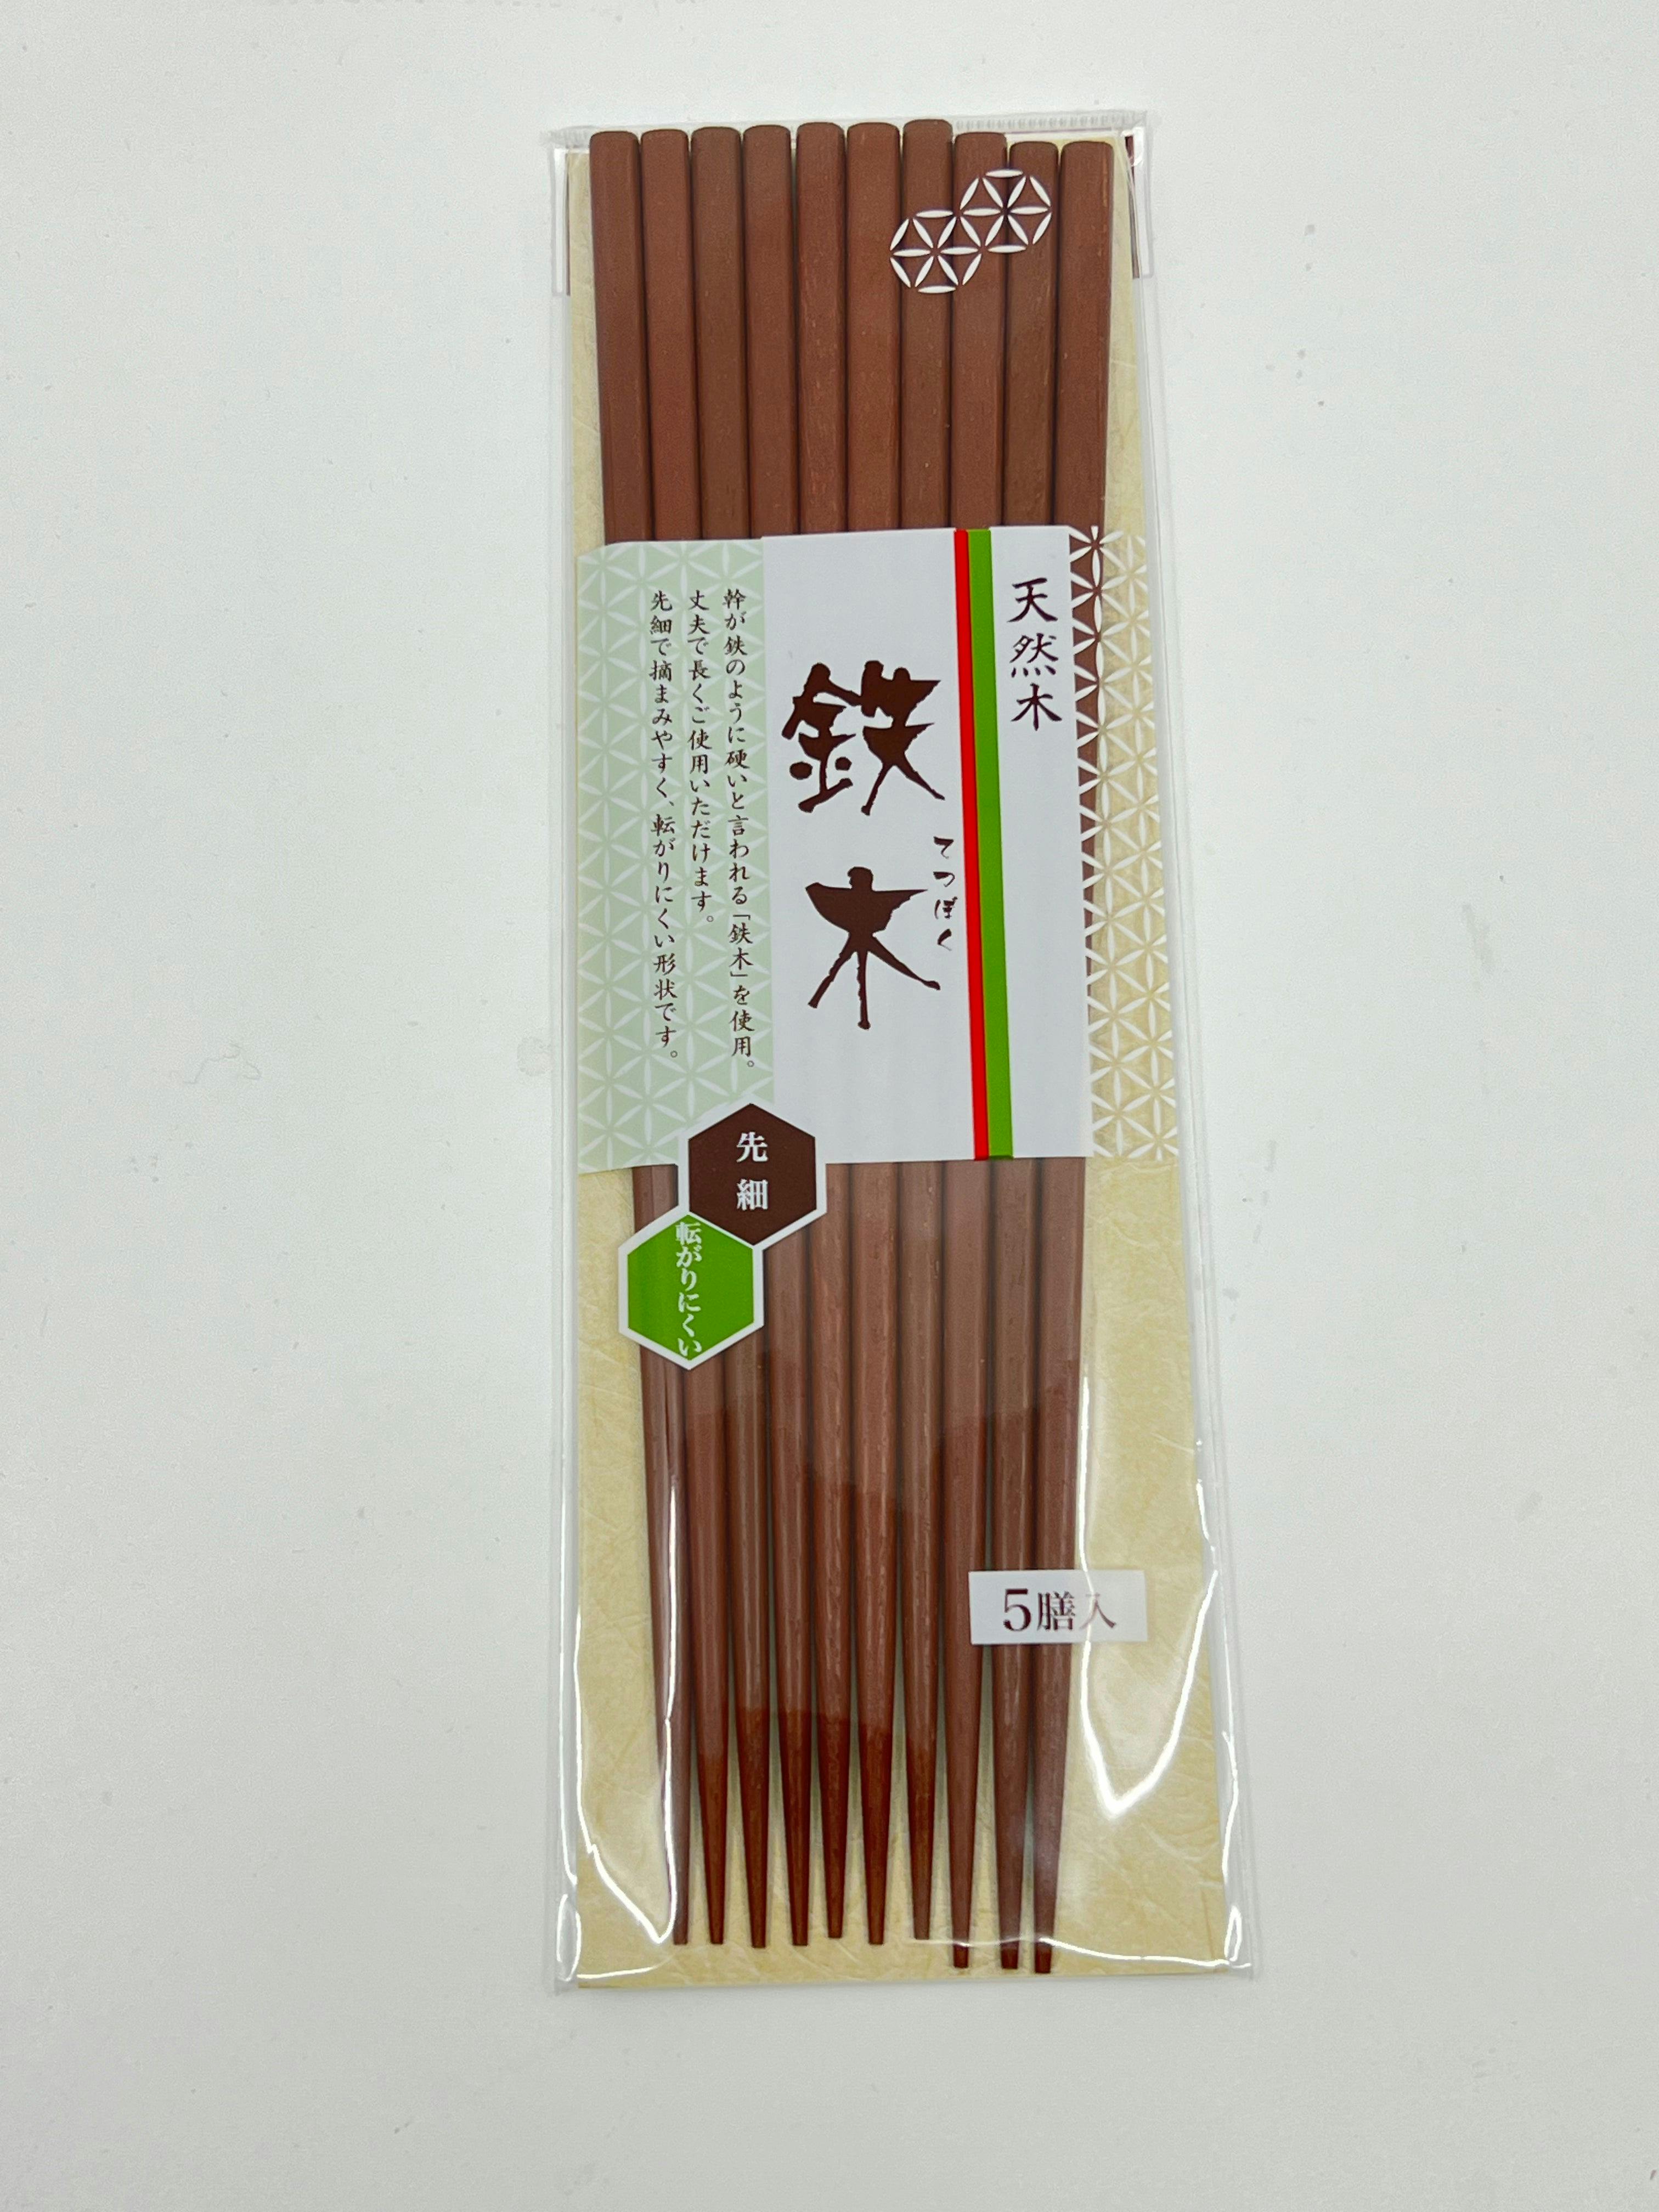 Daiwa Ironwood Chopstick Thin Square 5 pairs 日本 铁木 筷子